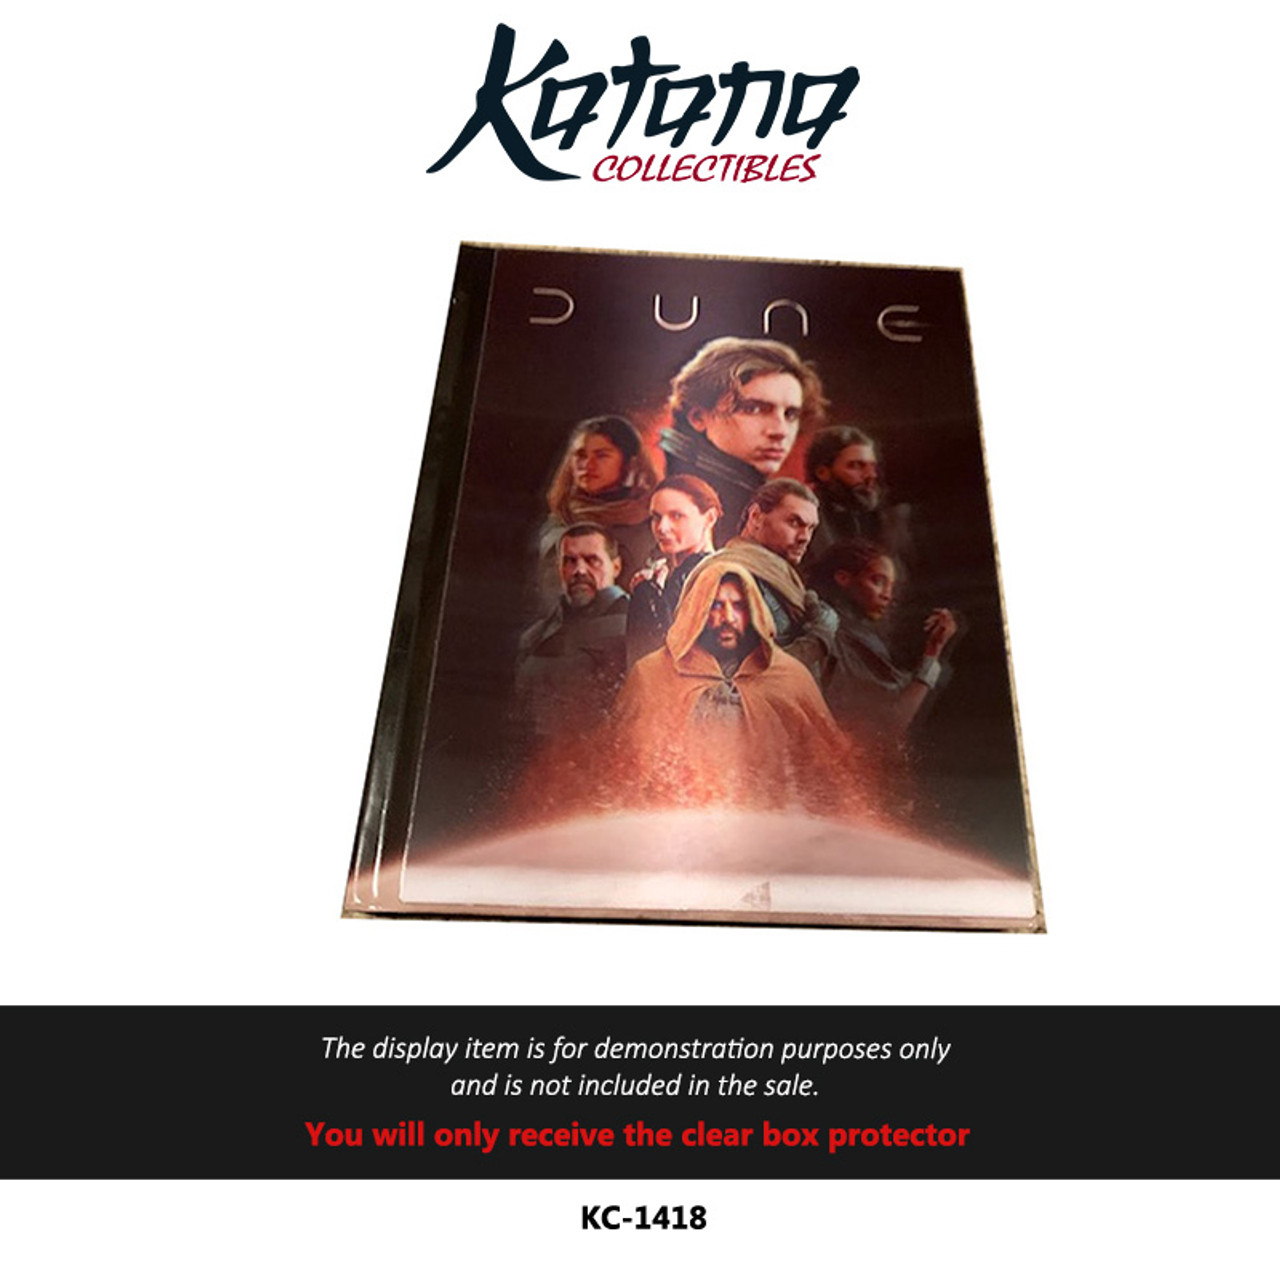 Katana Collectibles Protector For Dune Digibook